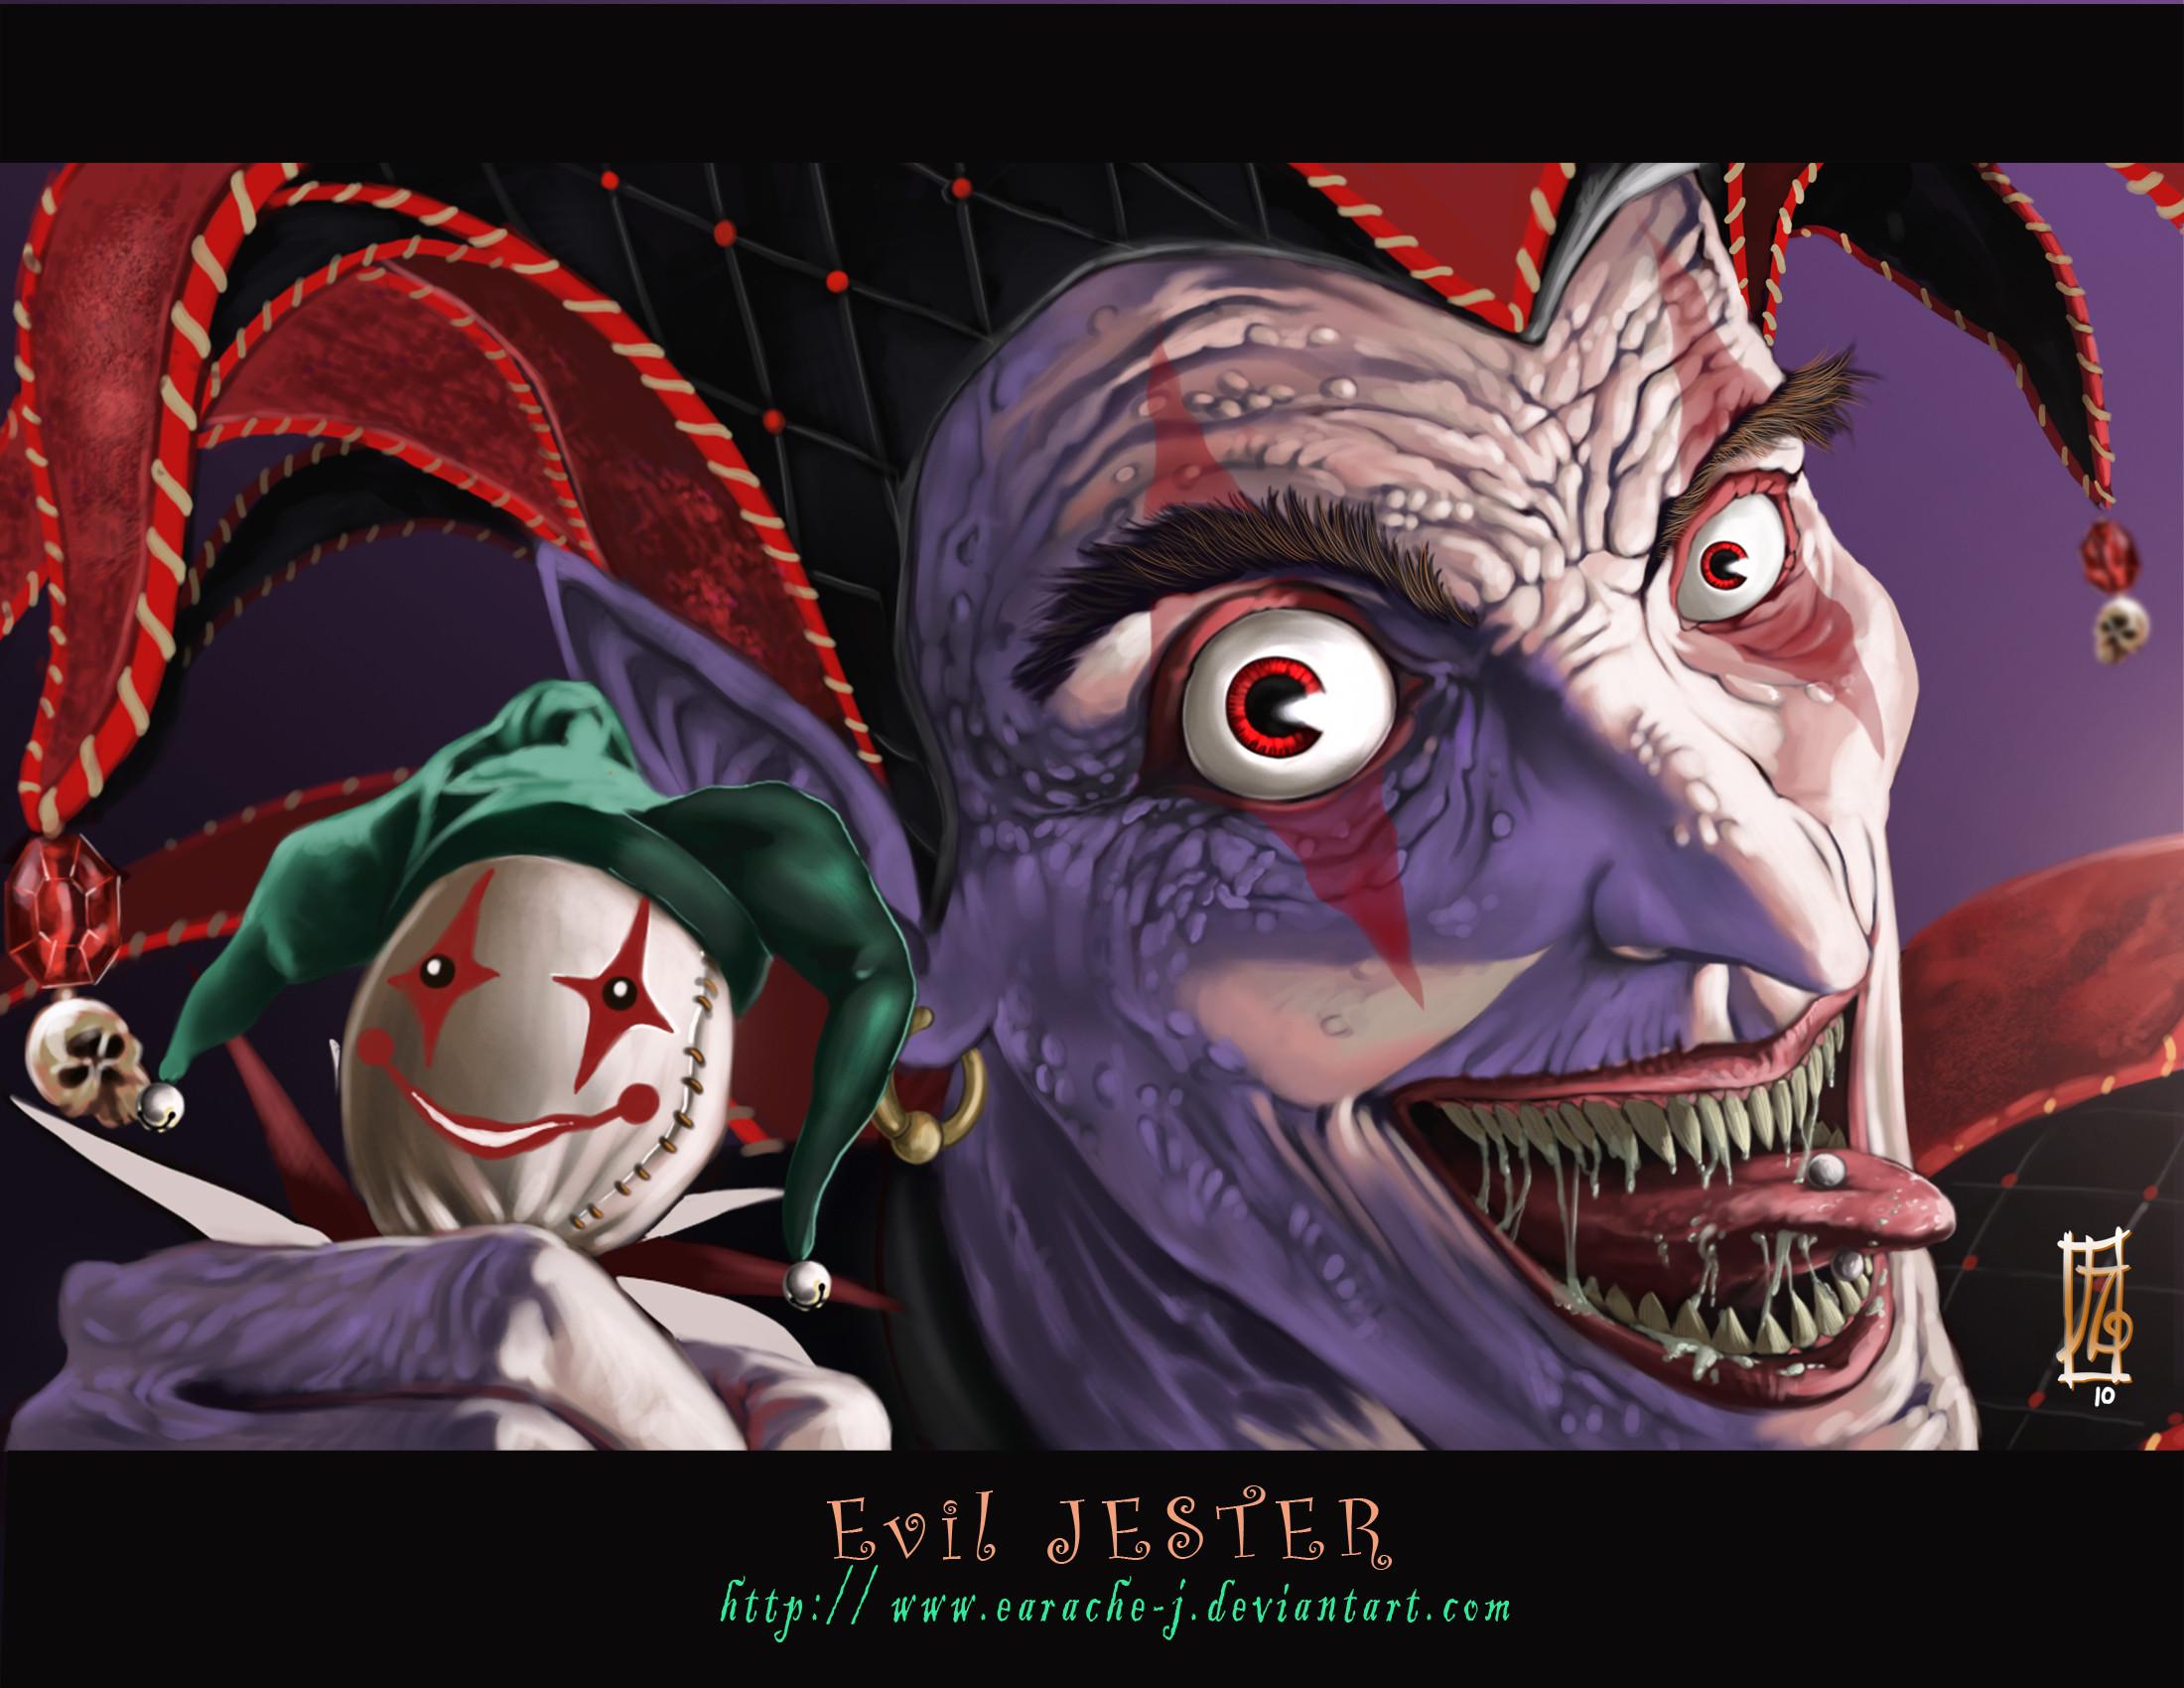 Evil Jester wallpaper from Clowns wallpaper